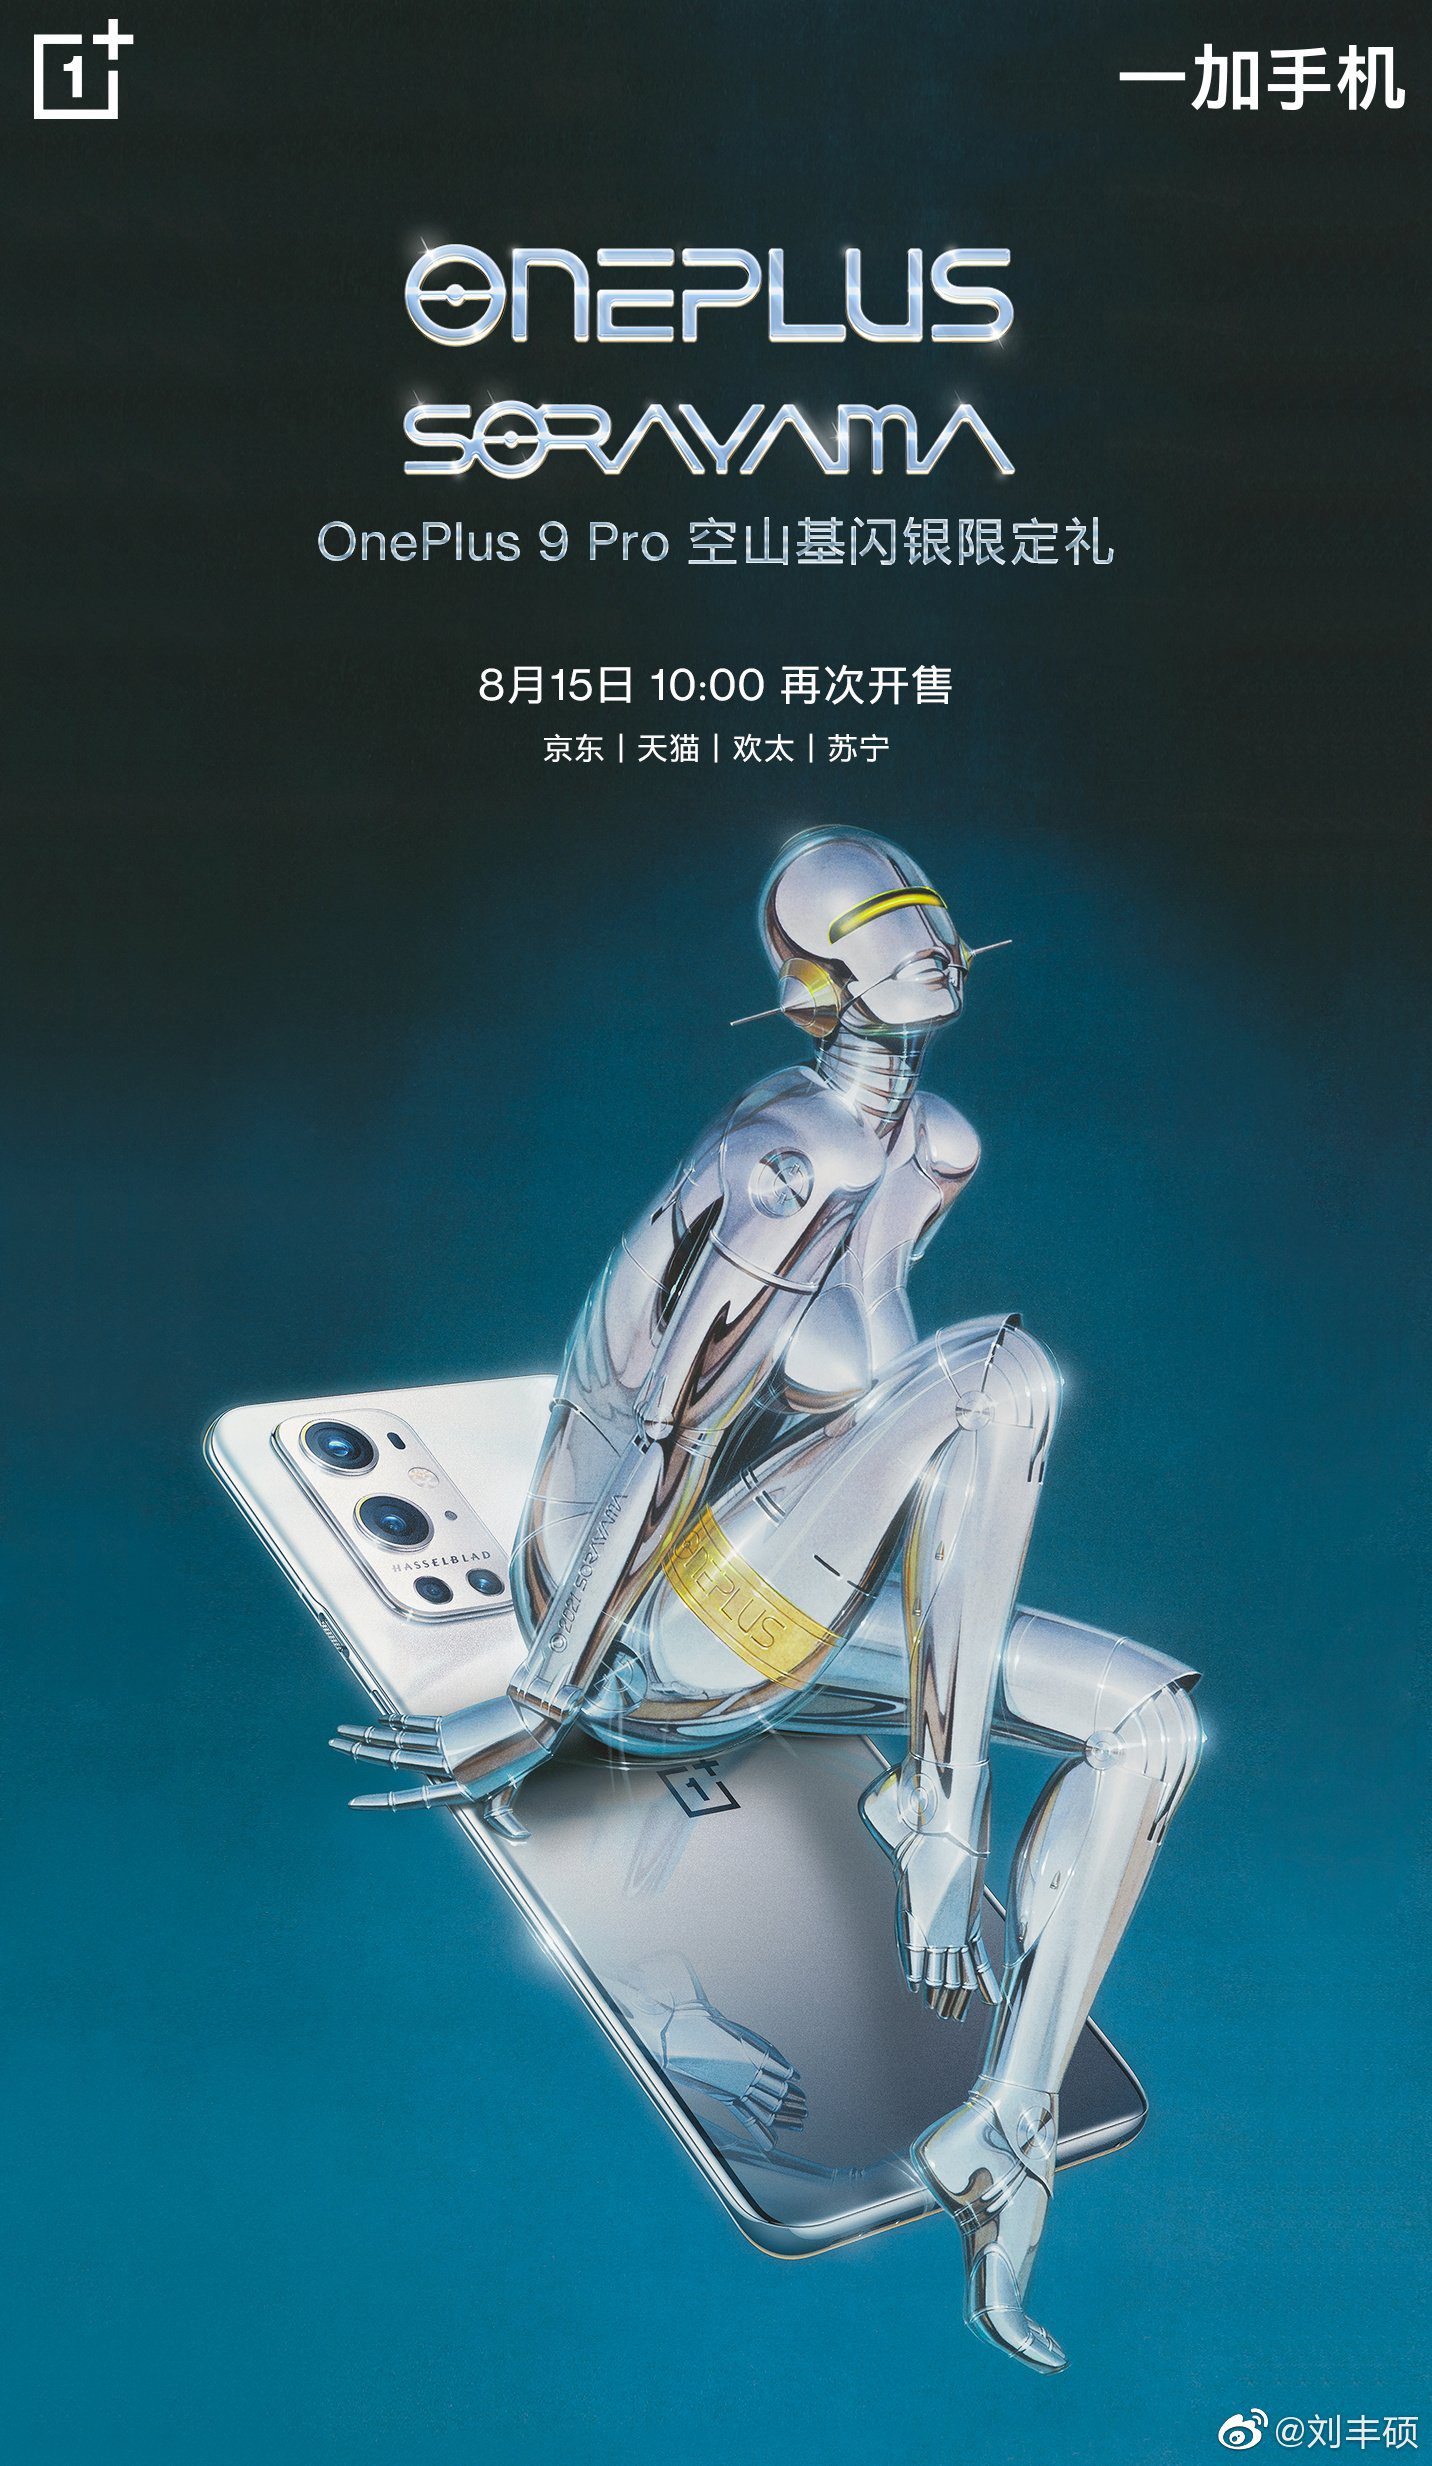 OnePlus 9 Pro Flash Silver Edition снова поступит в продажу